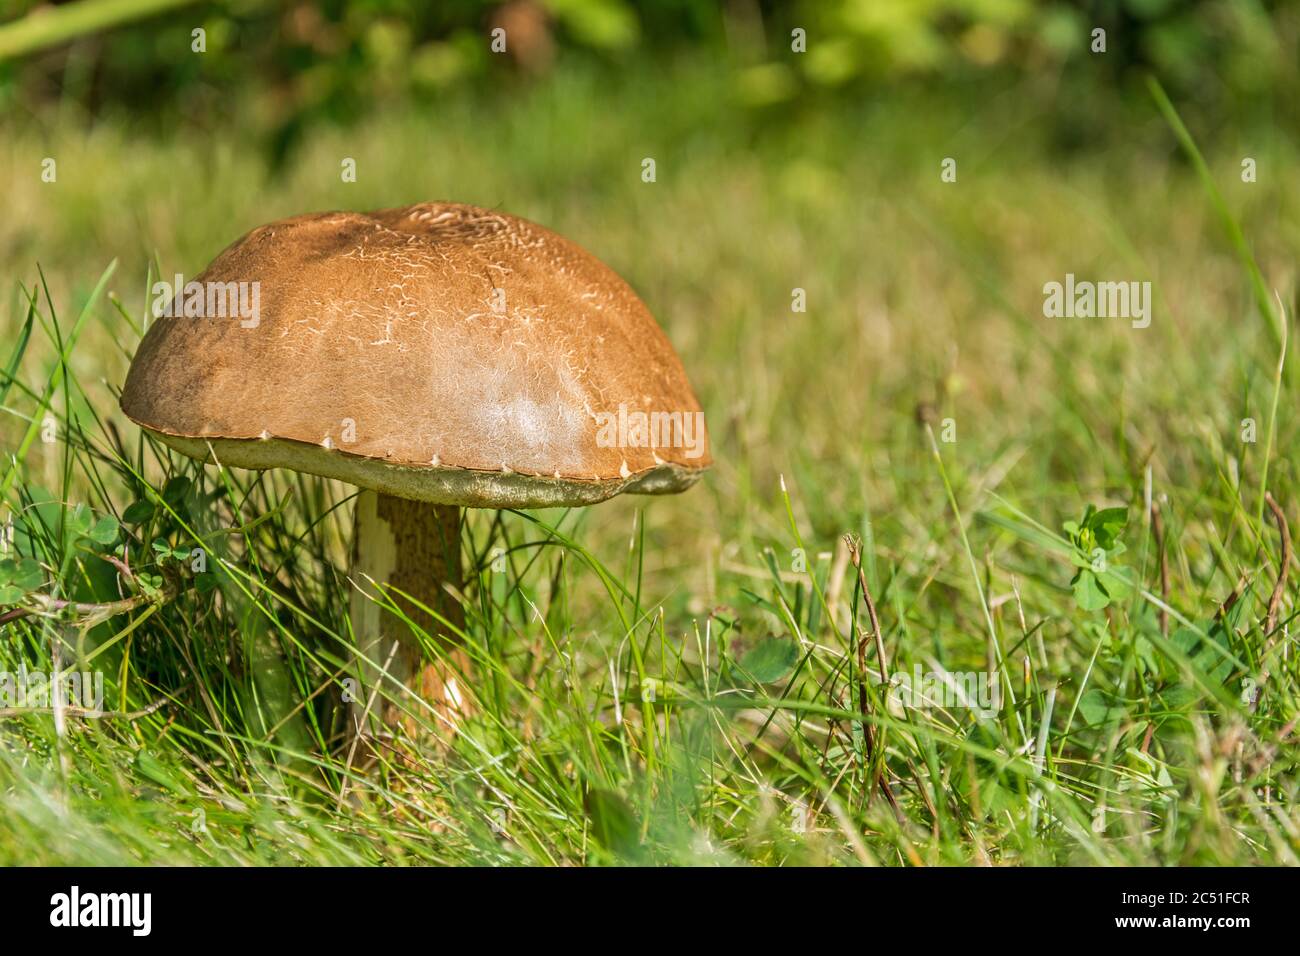 Brown tasty mushroom on a green grass meadow Stock Photo